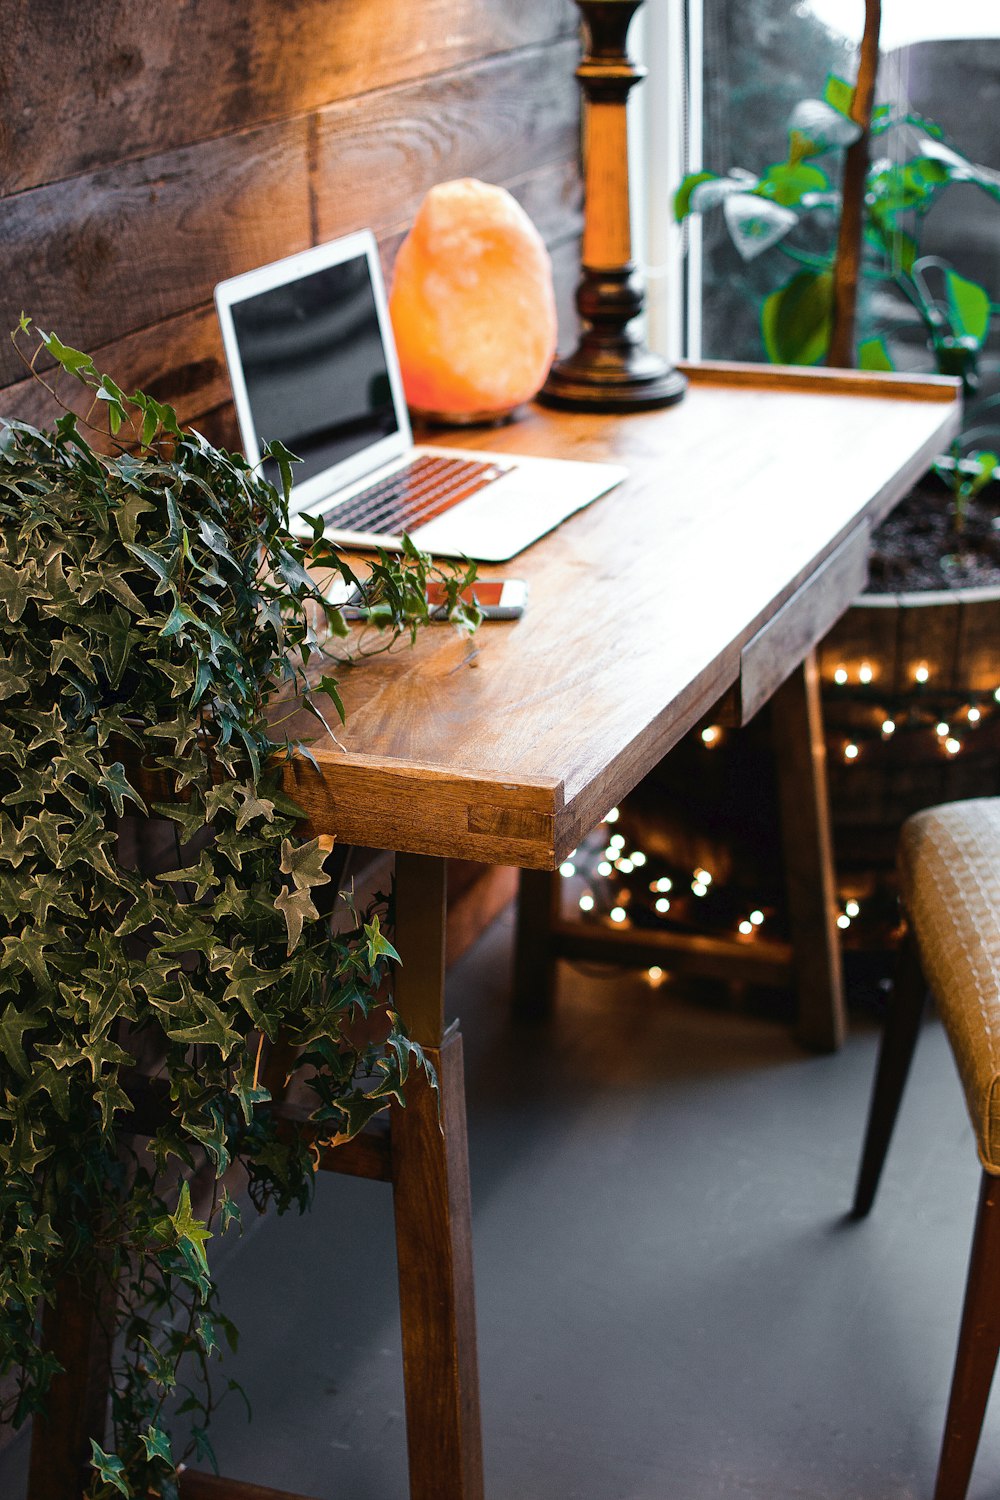 MacBook Air argentato su tavolo in legno marrone